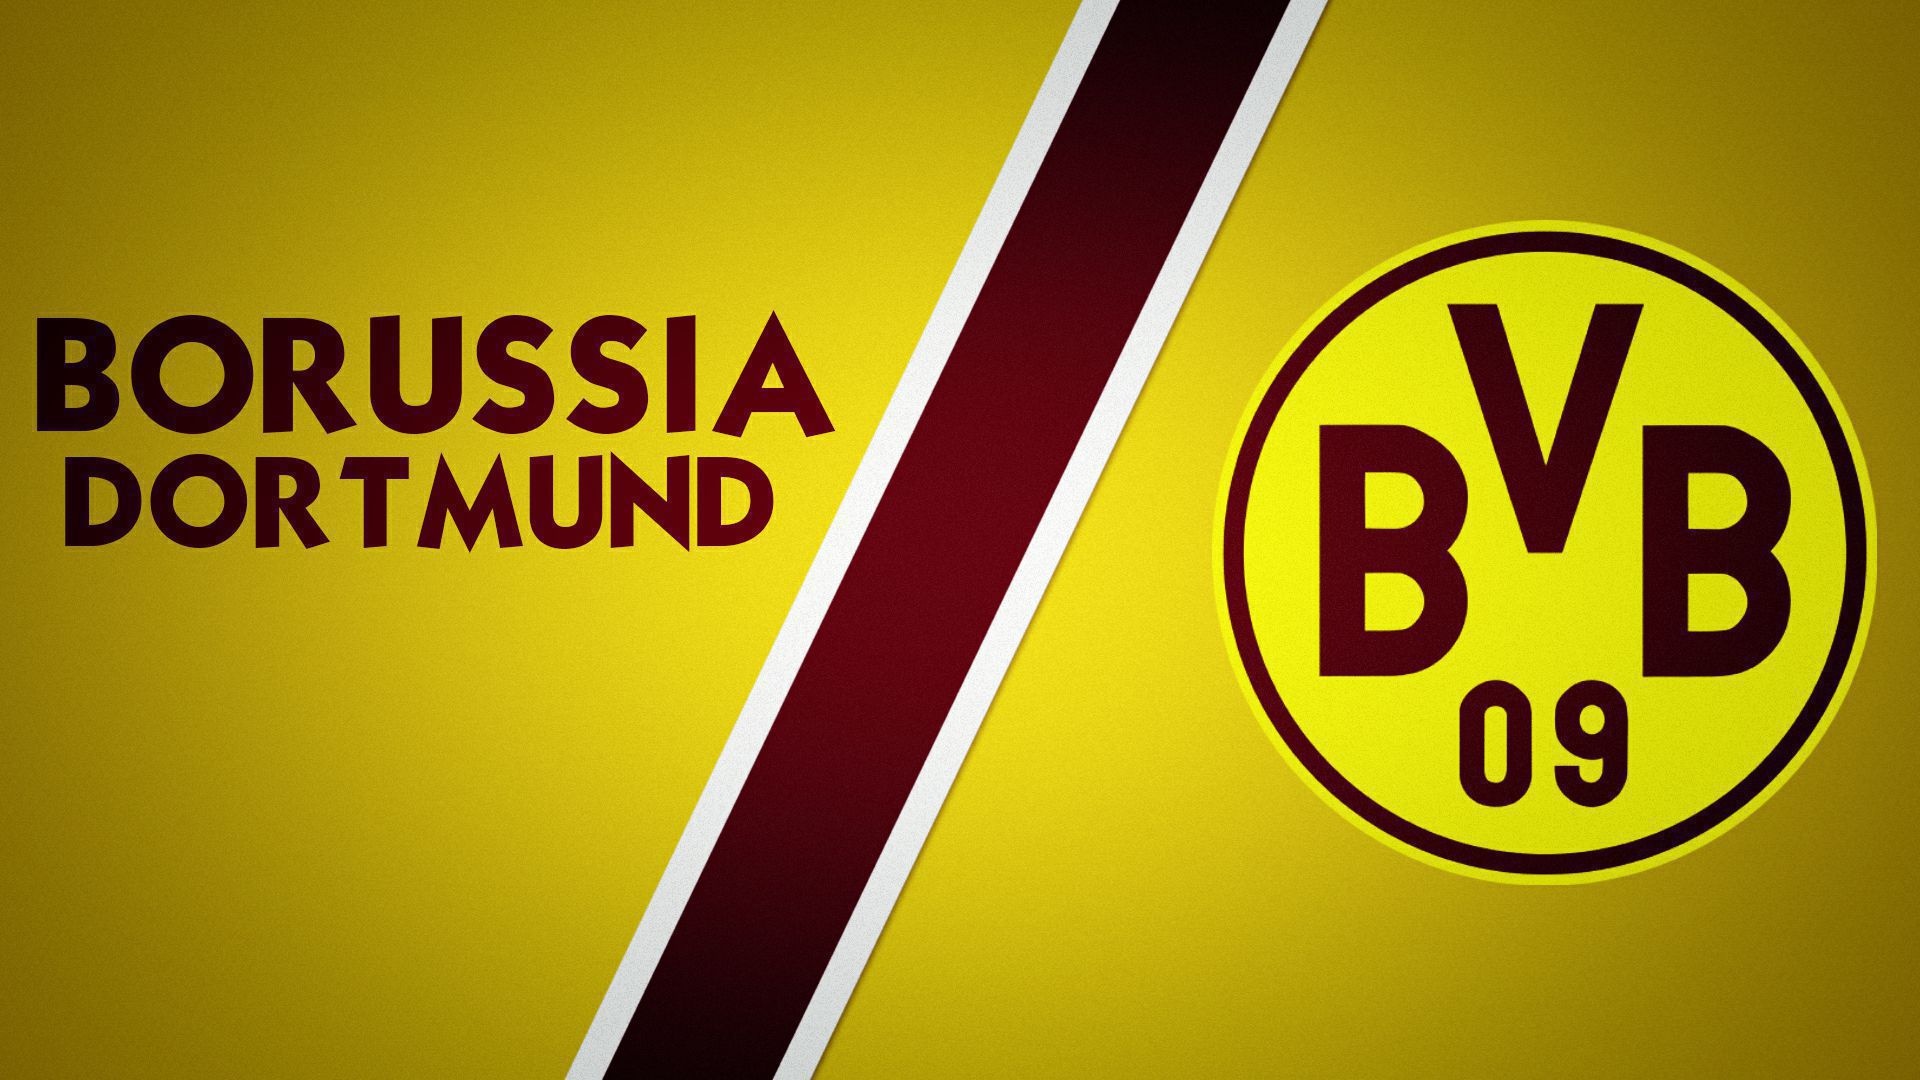 Borussia Dortmund: An active member of the Bundesliga. 1920x1080 Full HD Background.